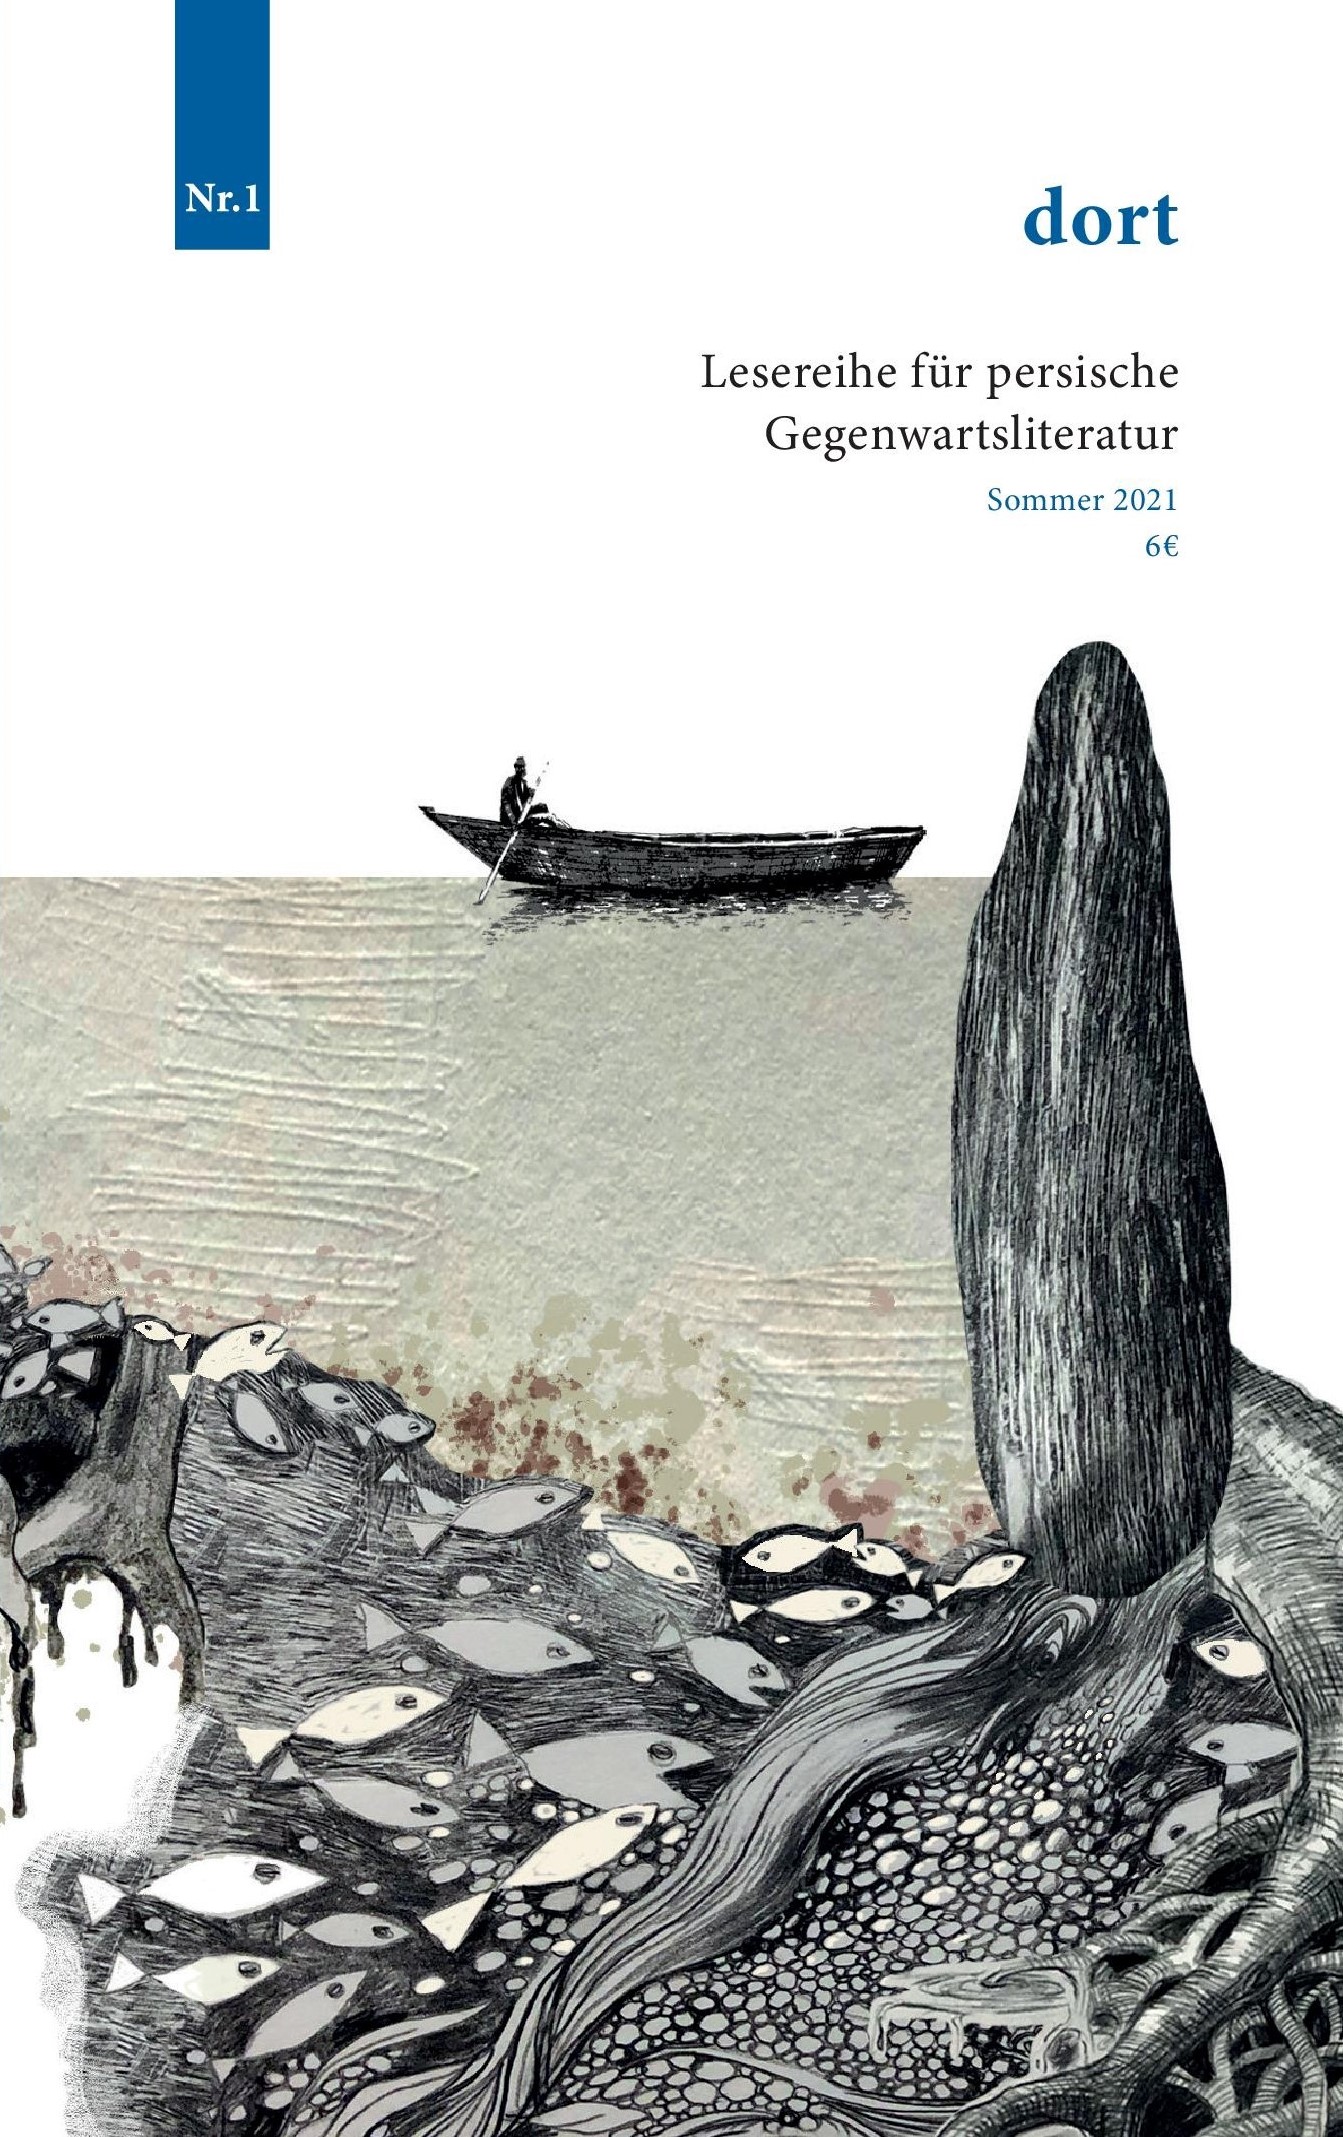 Cover of "dort" literary magazine, showcasing contemporary Persian literature (source: publisher)